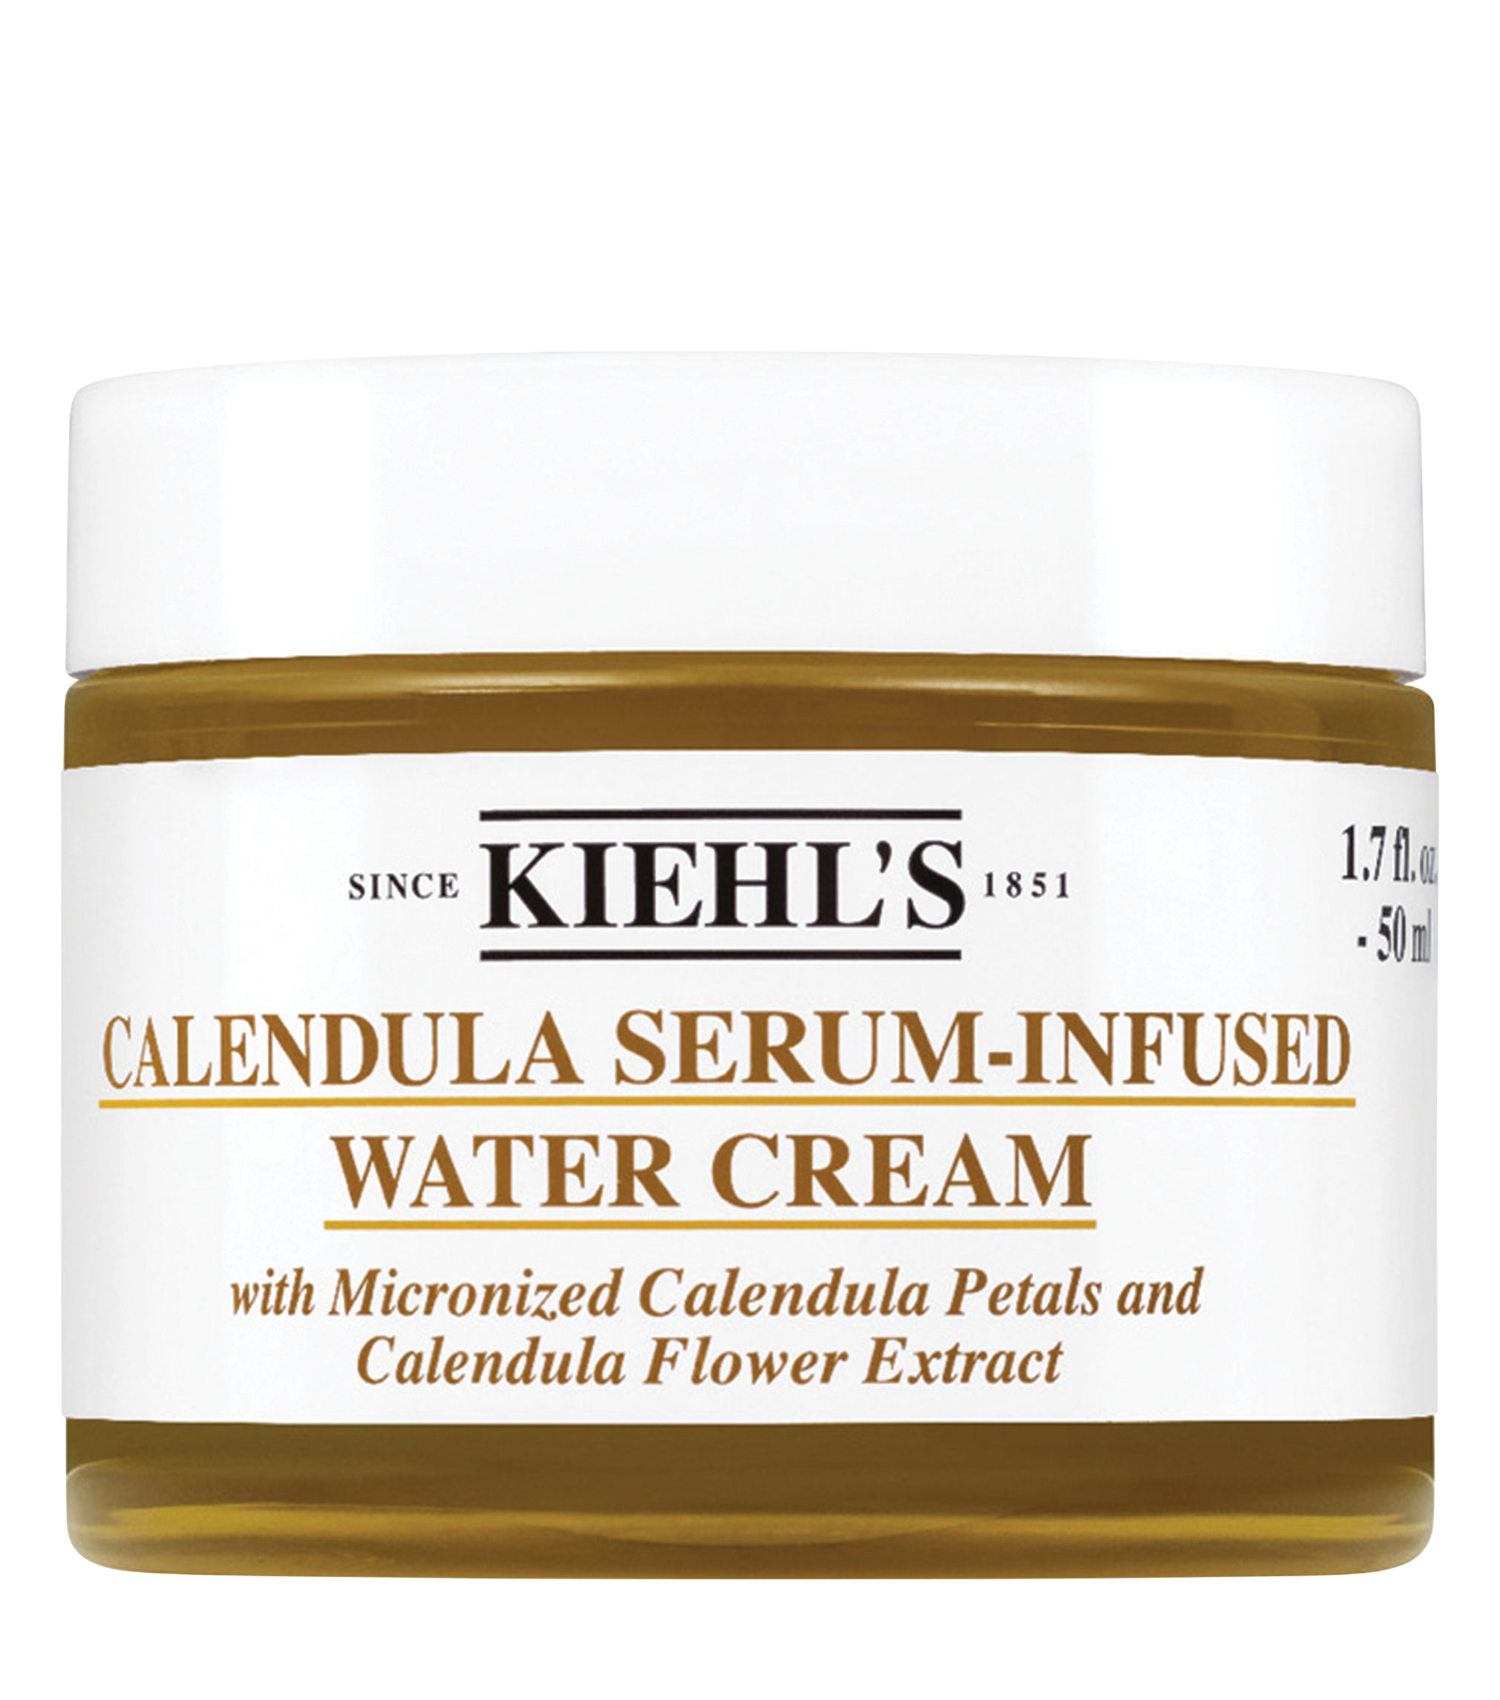 Calendula Serum-Infused Water Cream Calendula Water Cream - 7ml - deluxe mini jar 1